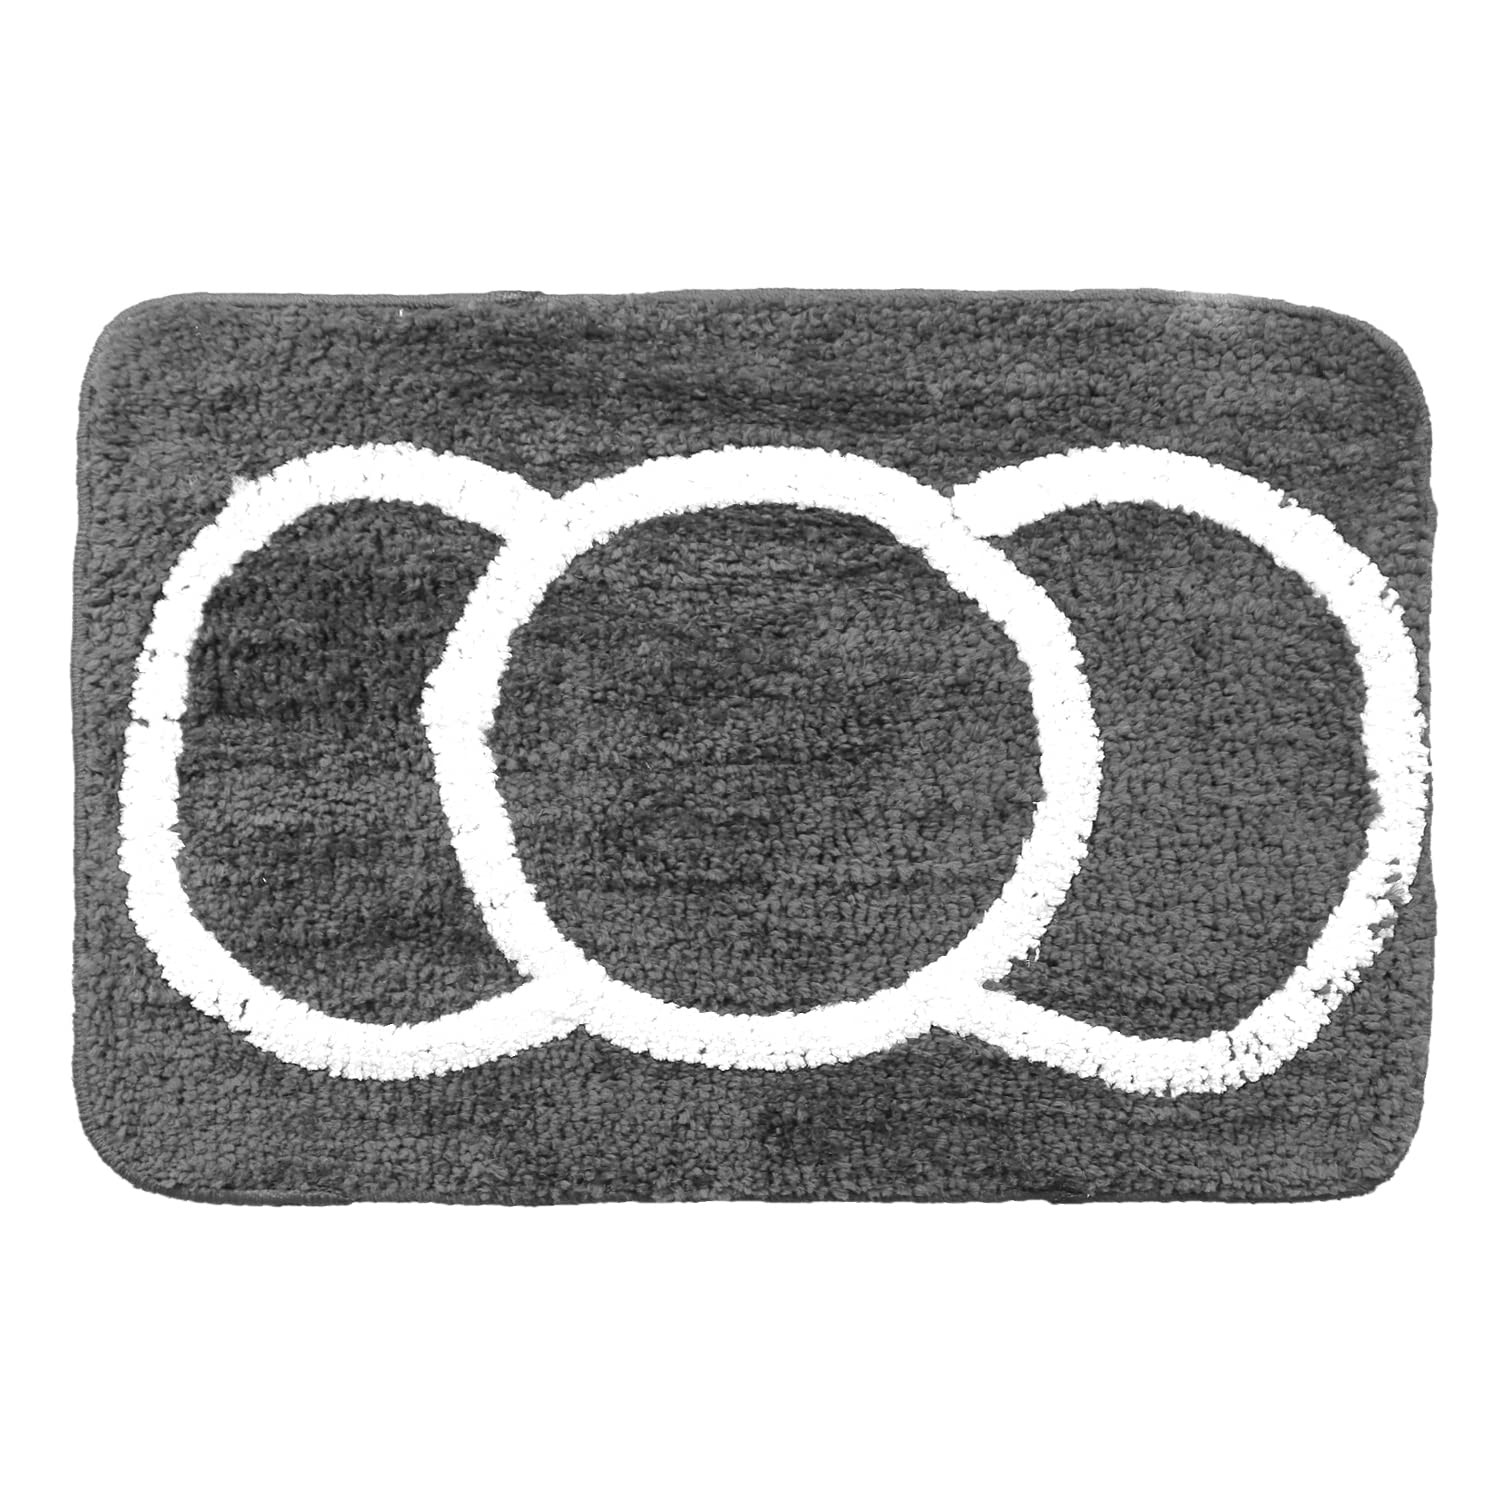 Kuber Industries Super Soft Door mat|Microfiber Anti-Slip Water Absorbant Fluffy Floor Mat|Circular Pattern Entrance Mat for Kitchen,Bedside,Door,Living Room,60x40 cm,Pack of 2 (Brown & Gray)